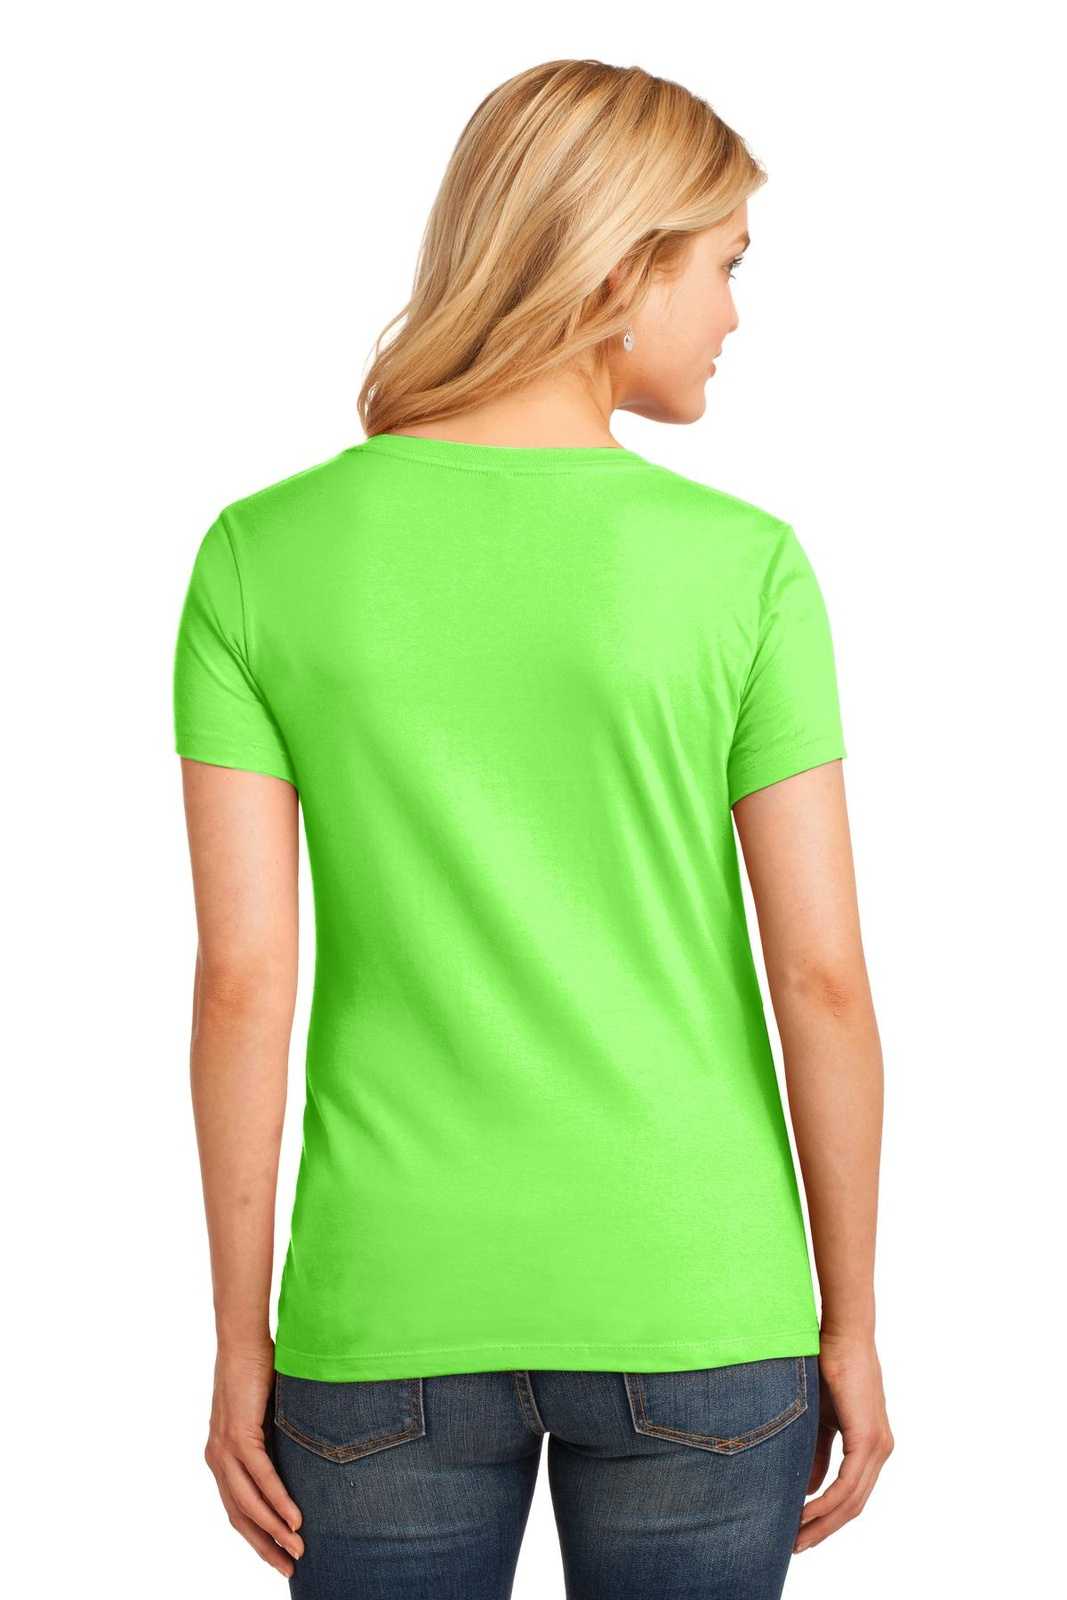 Port & Company LPC54V Ladies Core Cotton V-Neck Tee - Neon Green - HIT a Double - 1